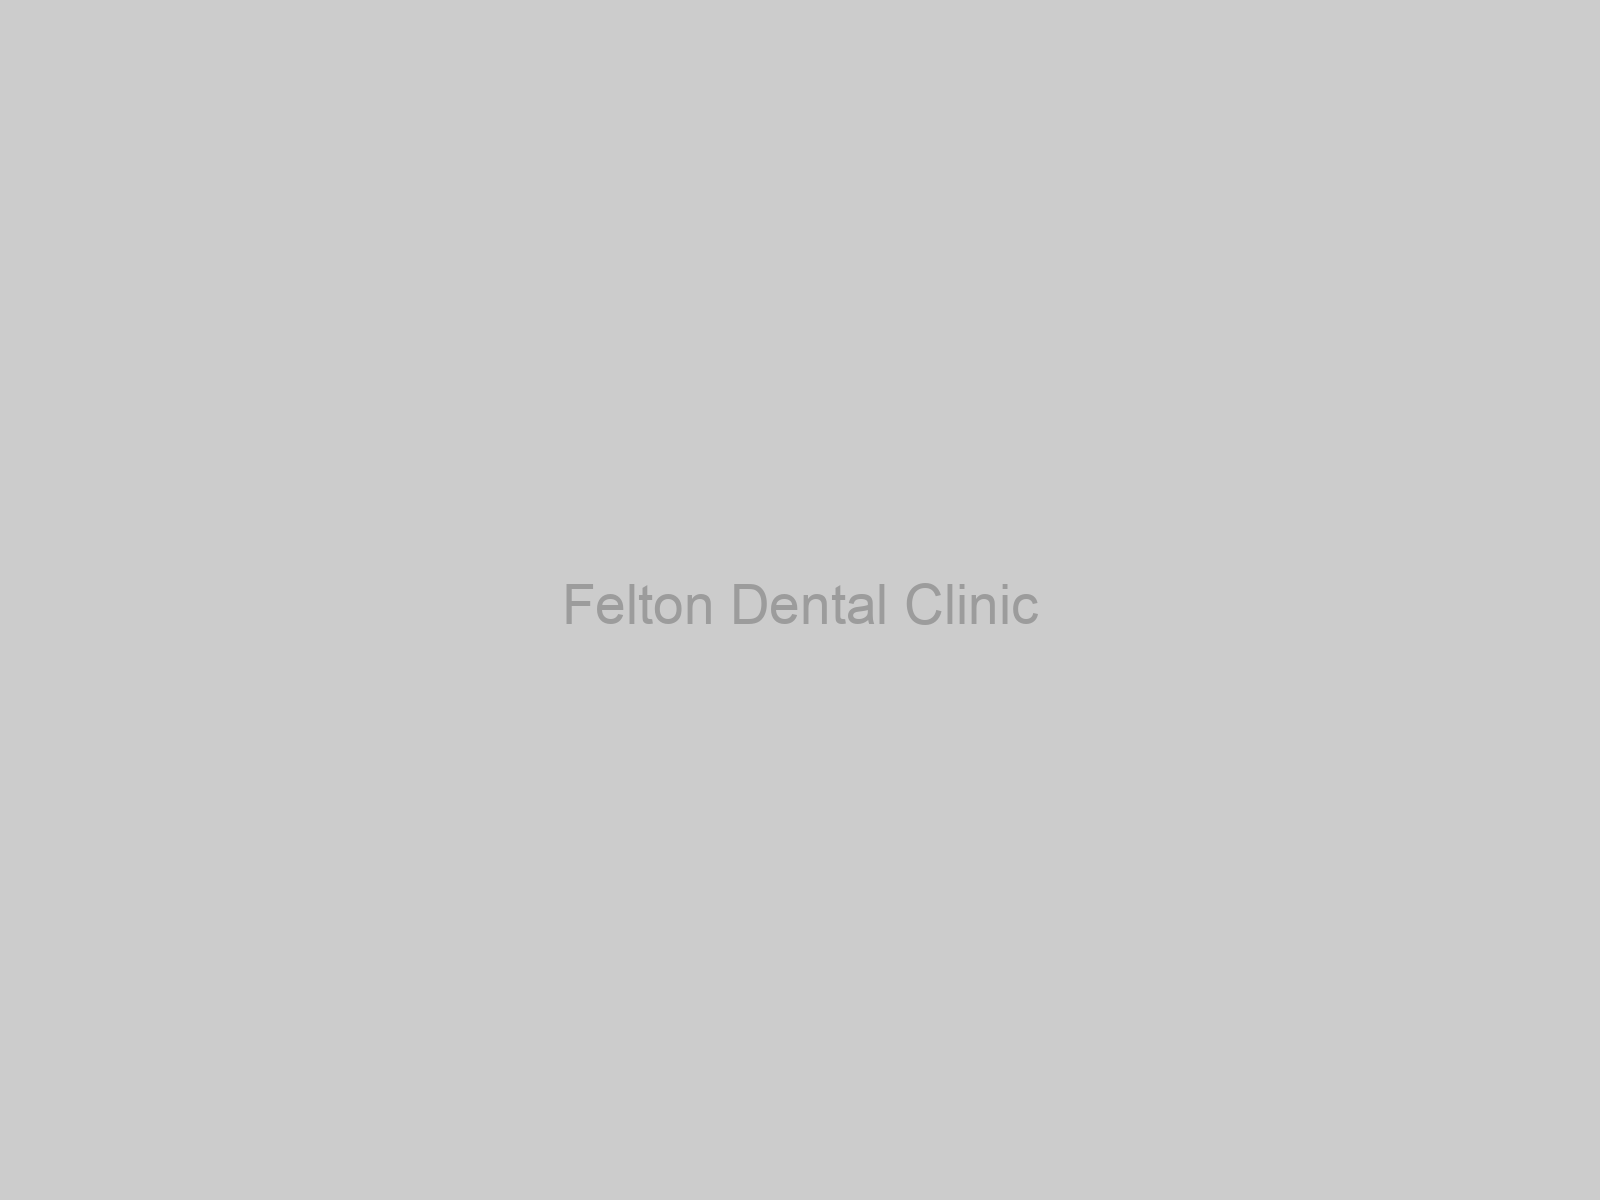 Felton Dental Clinic